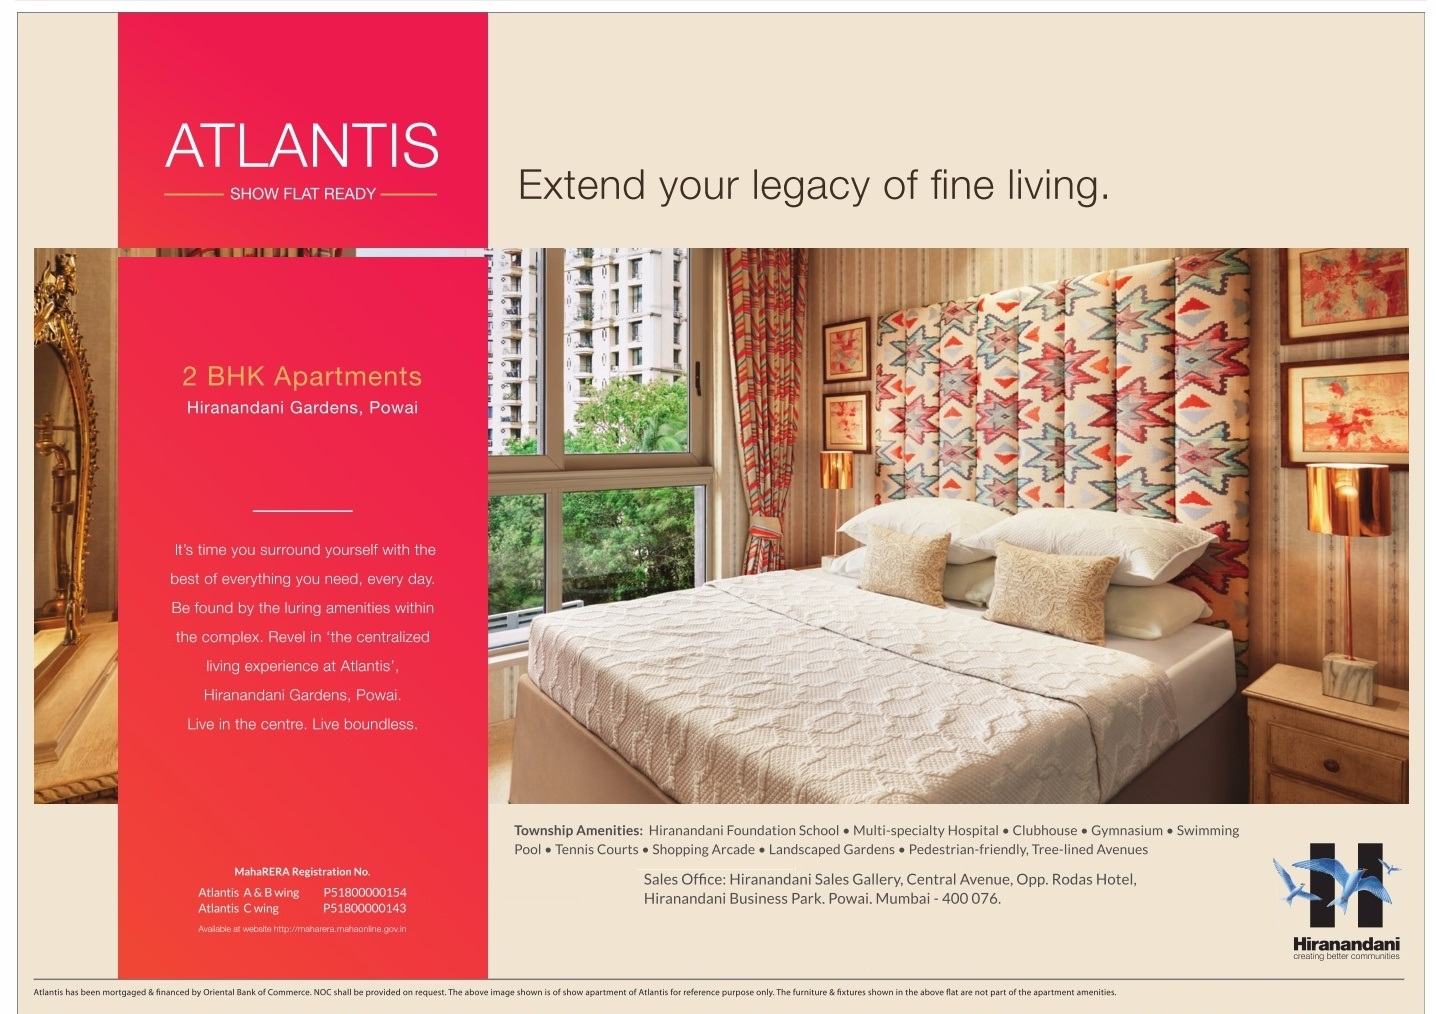 Extend your legacy of fine living at Hiranandani Atlantis in Mumbai